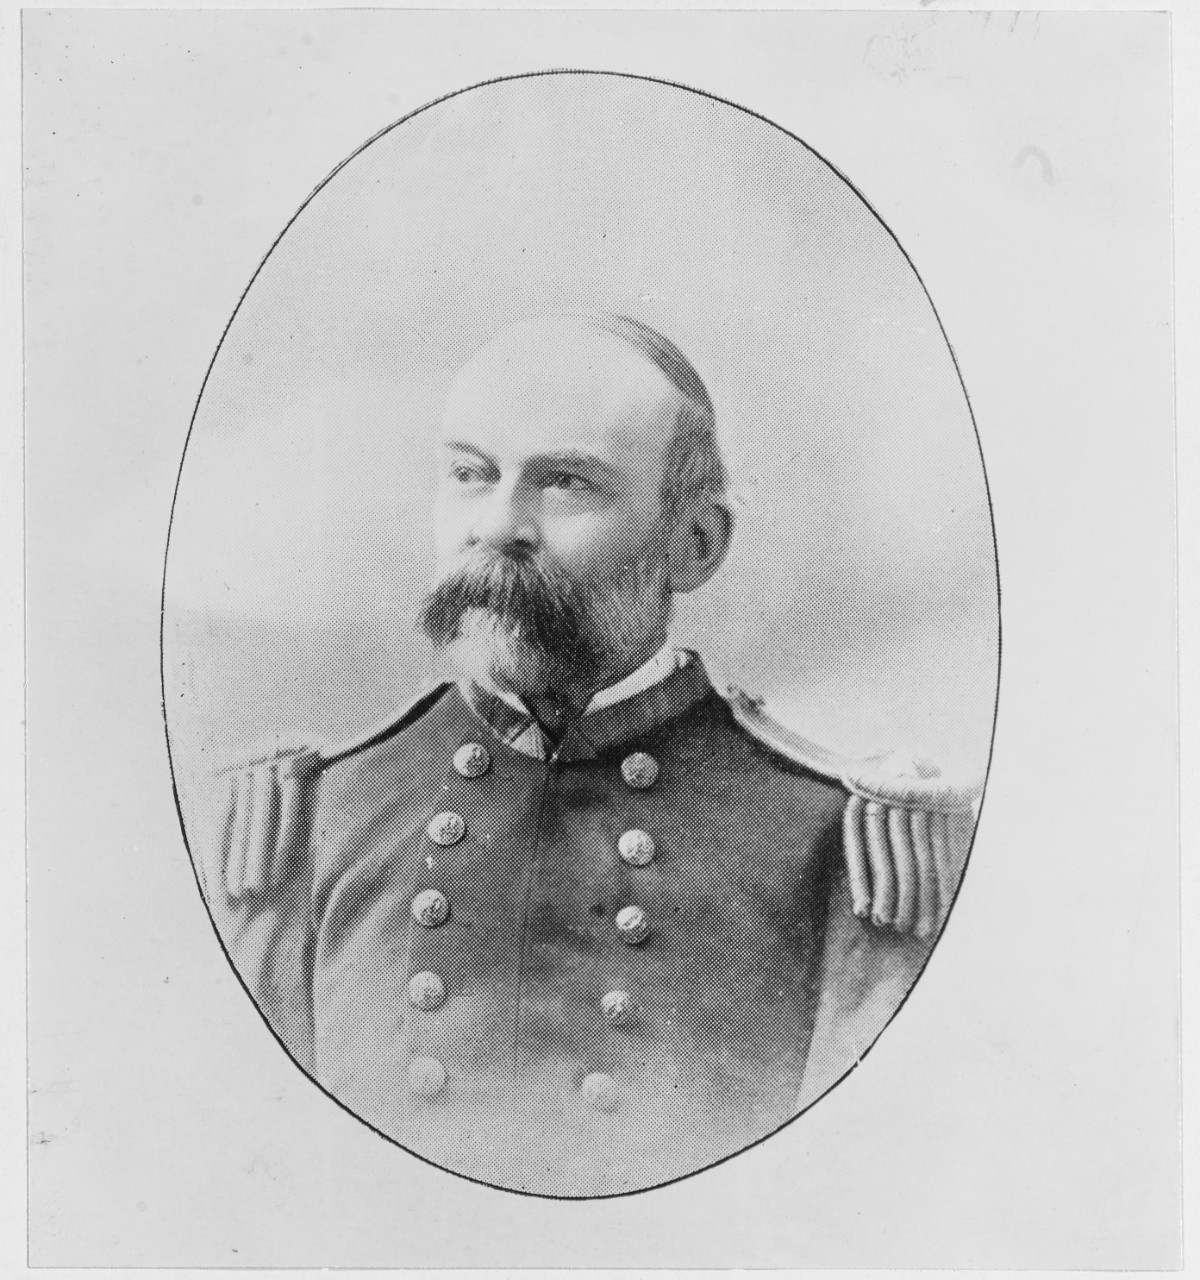 Lieutenant Commander William P. McCann